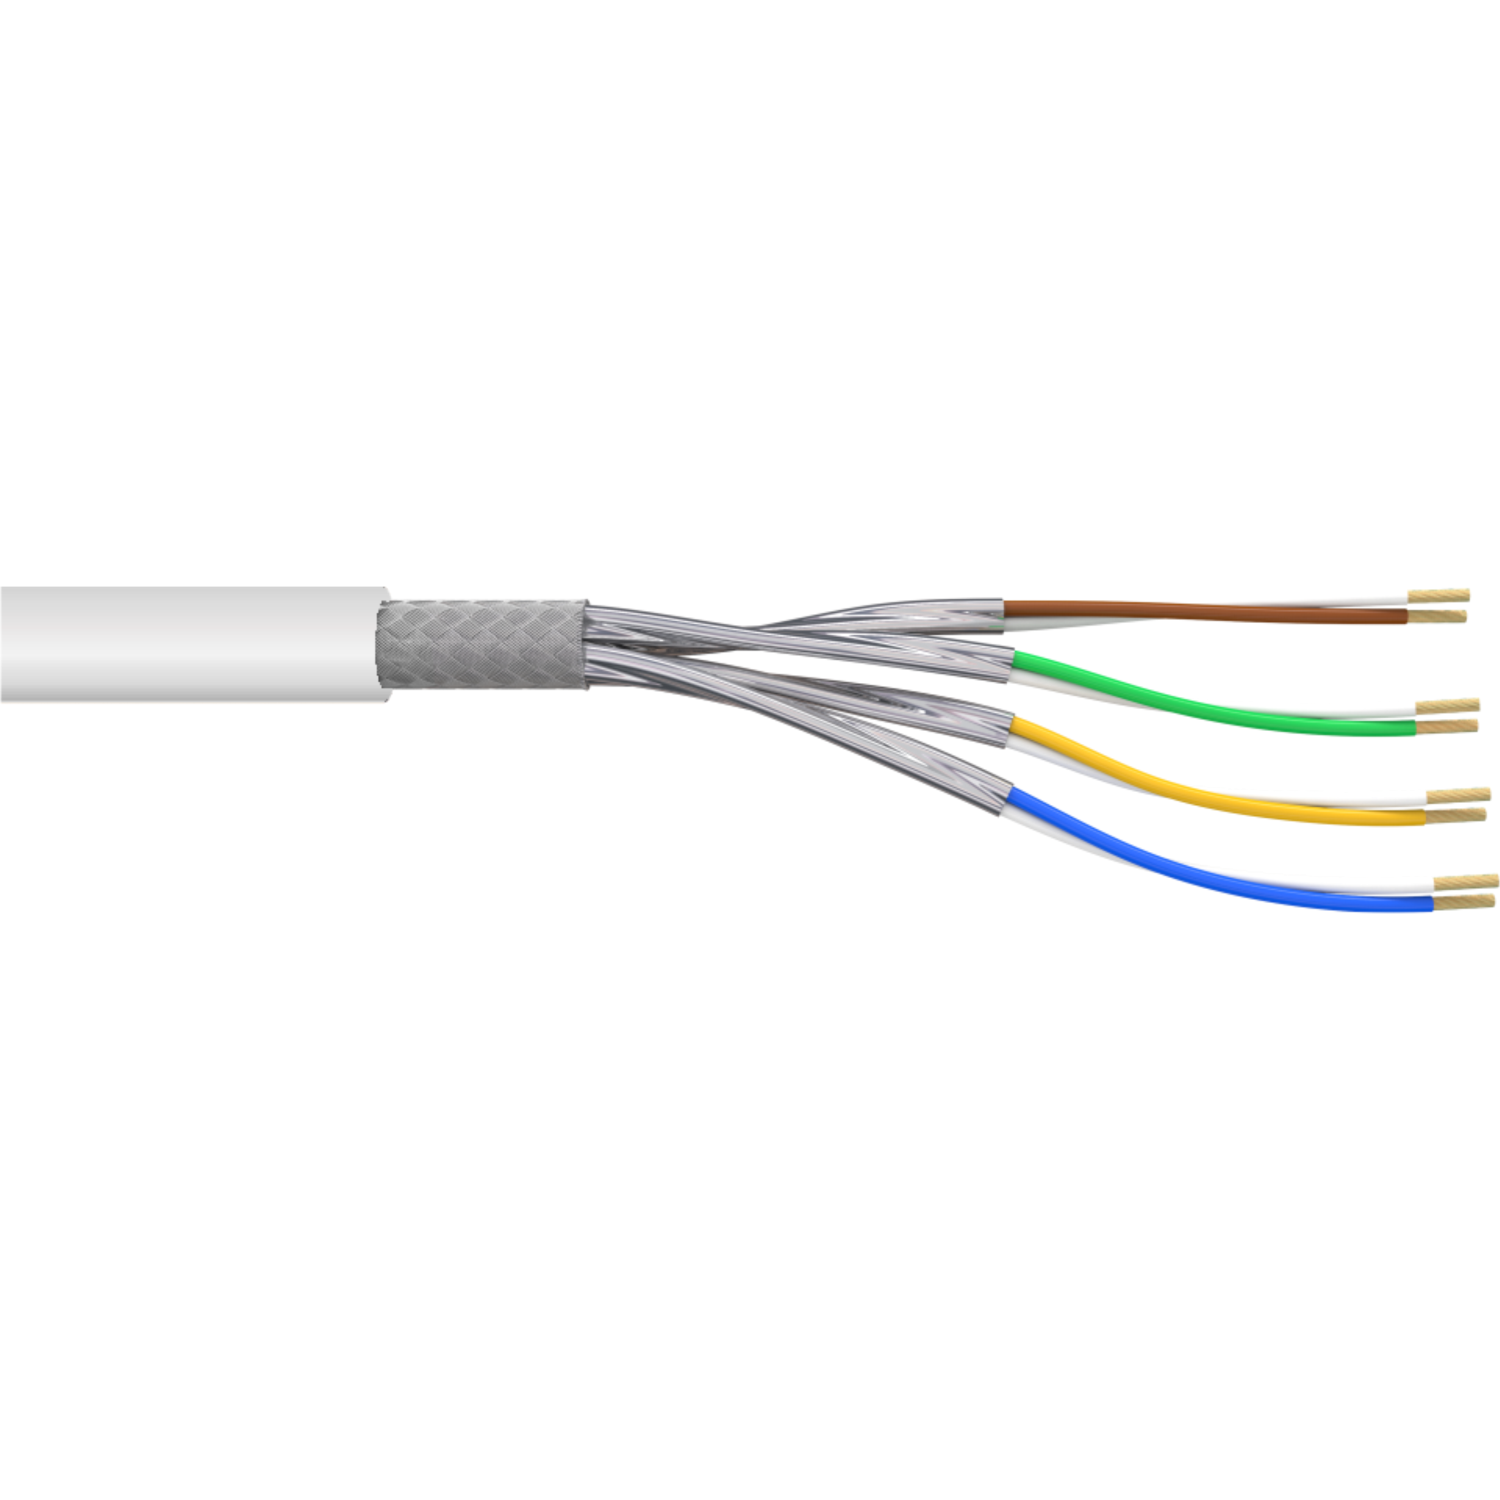 AIXONTEC 7 10 Netzwerkkabel, 50 4x m S/FTP Set RJ-45 Stecker Gigabit, Cat LAN Verlegekabel 50m